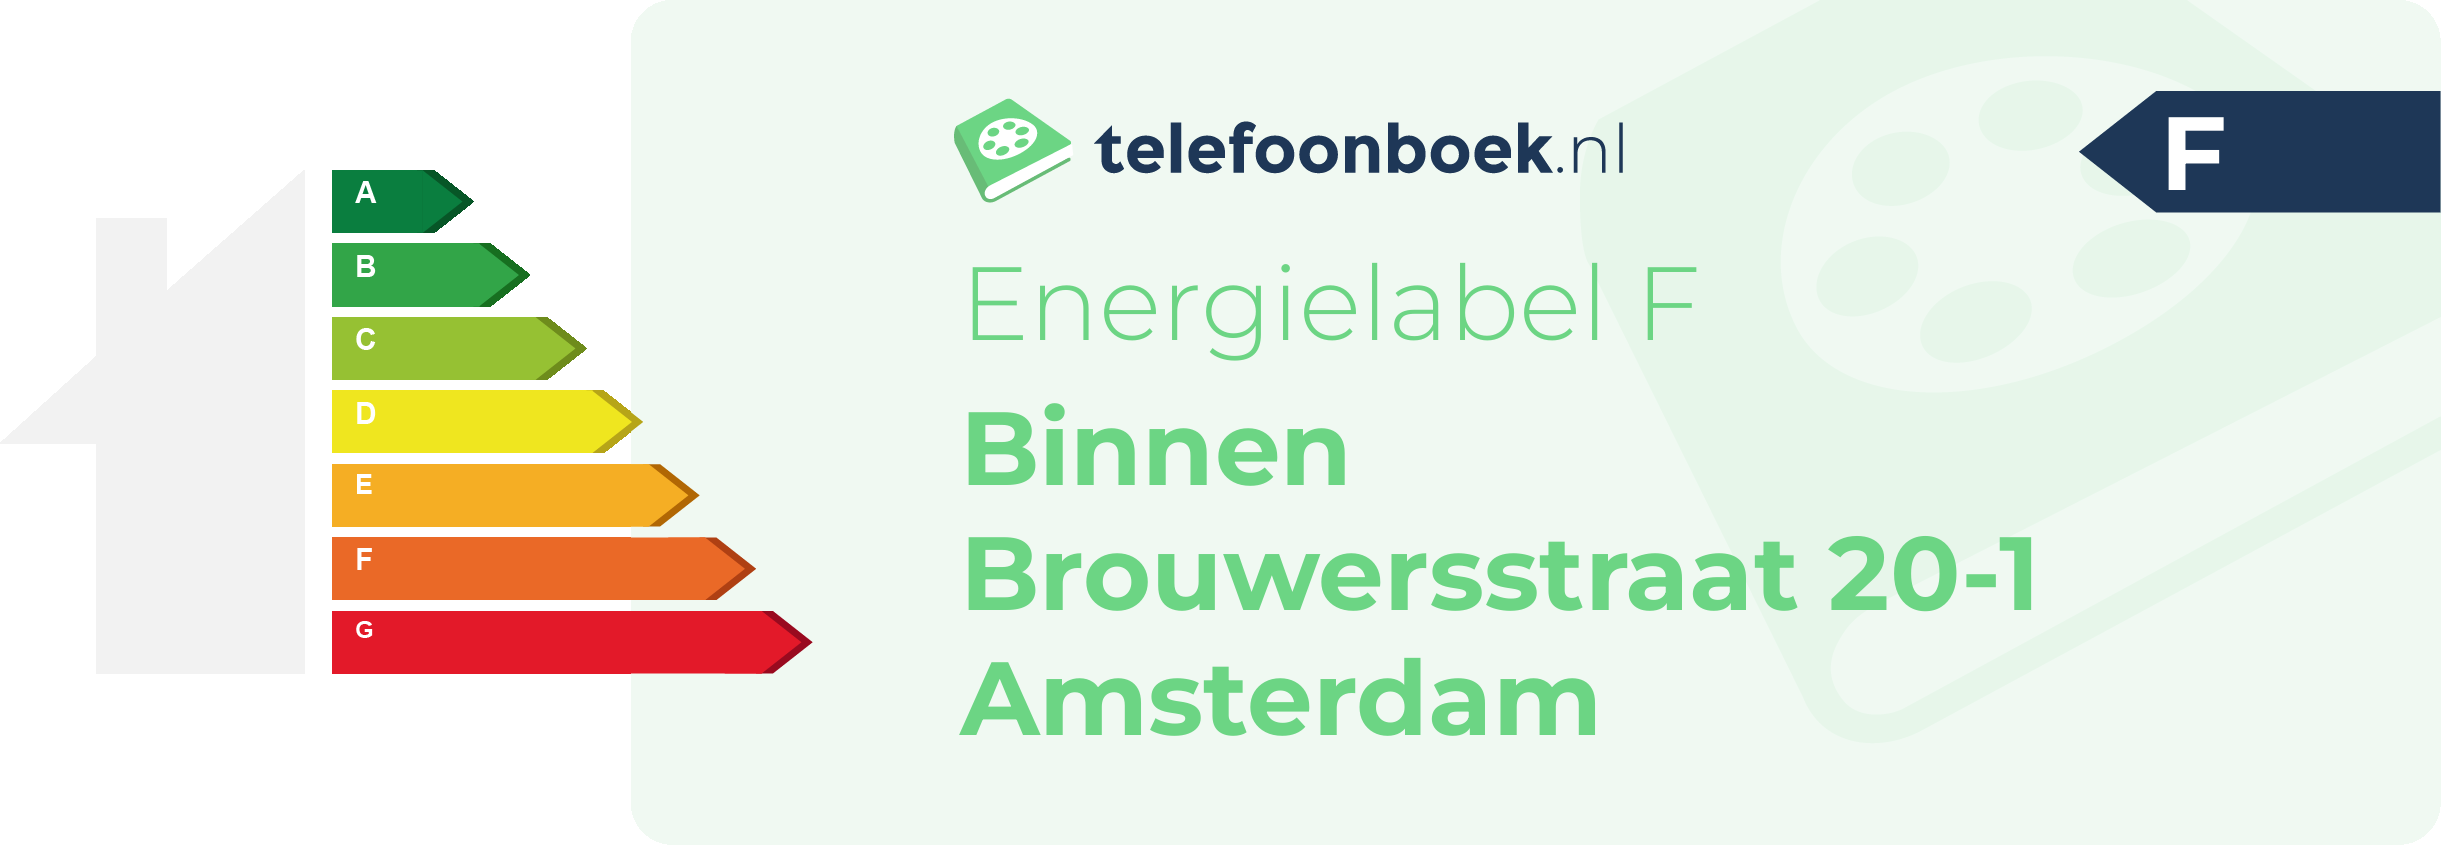 Energielabel Binnen Brouwersstraat 20-1 Amsterdam